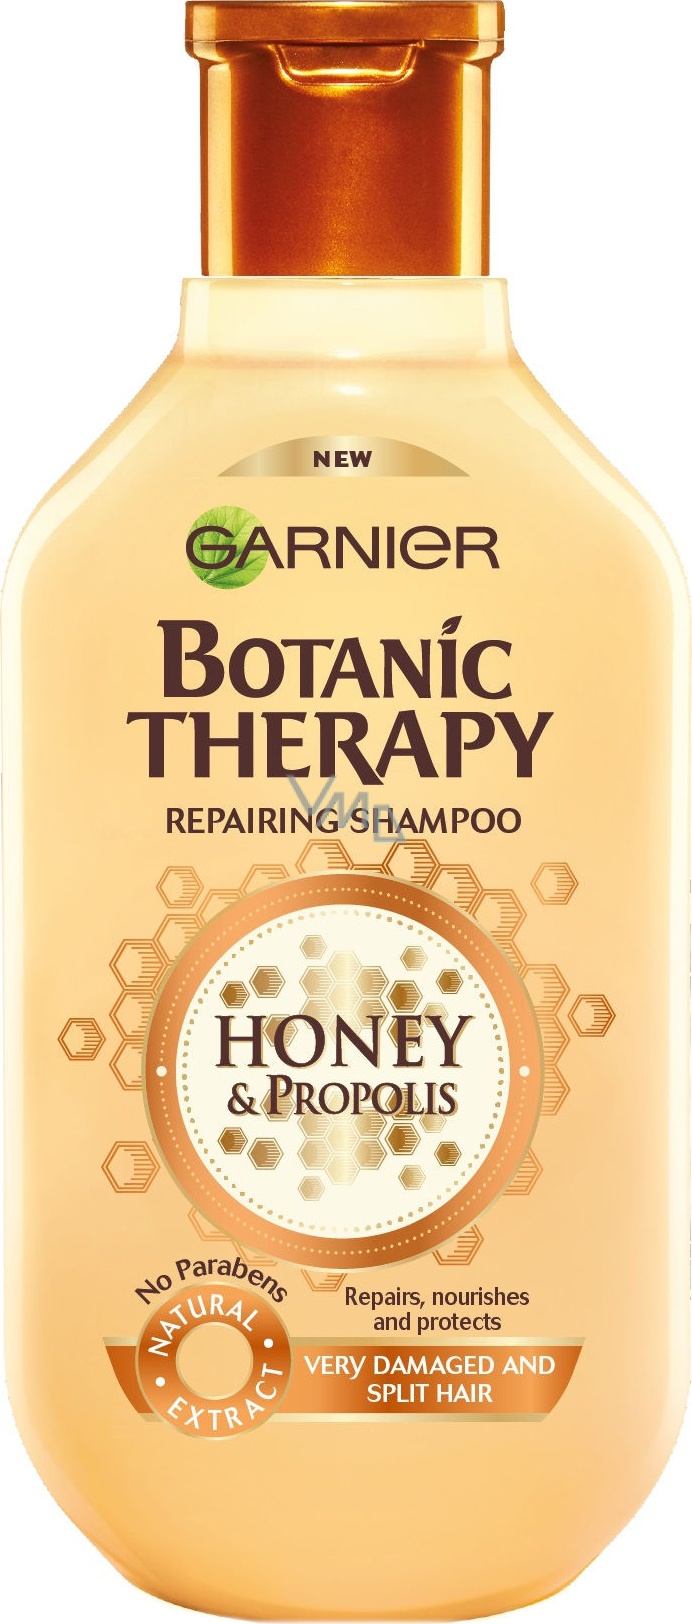 Garnier Botanic Therapy Honey & Propolis Repairing Shampoo